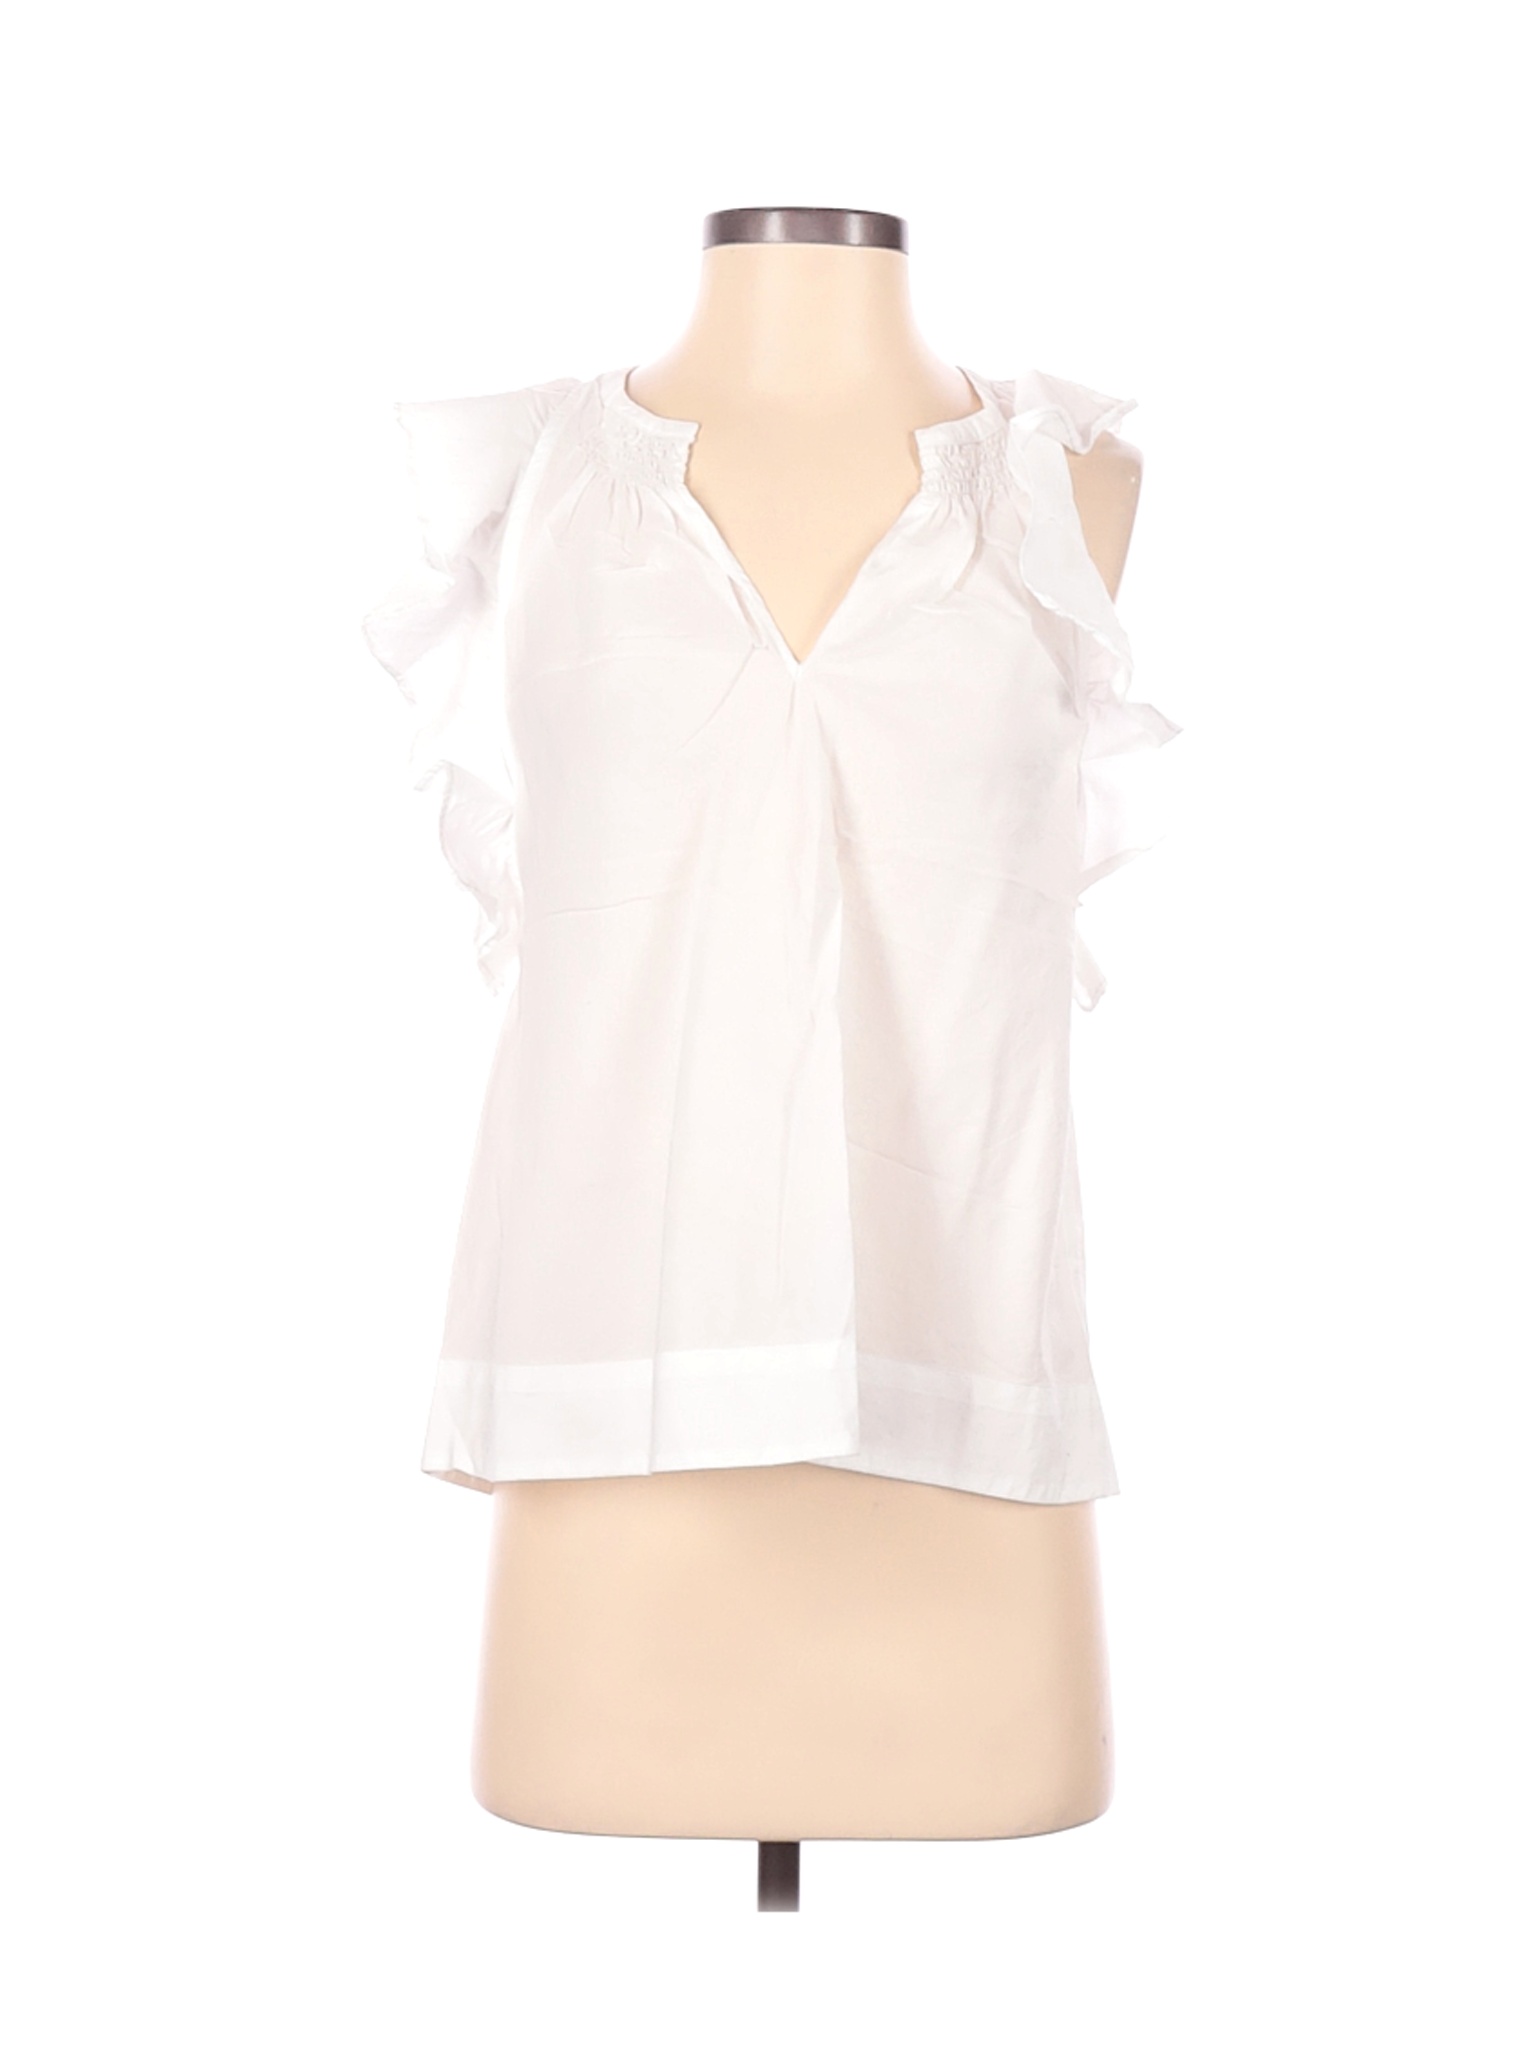 HD in Paris Women White Short Sleeve Blouse 0 | eBay